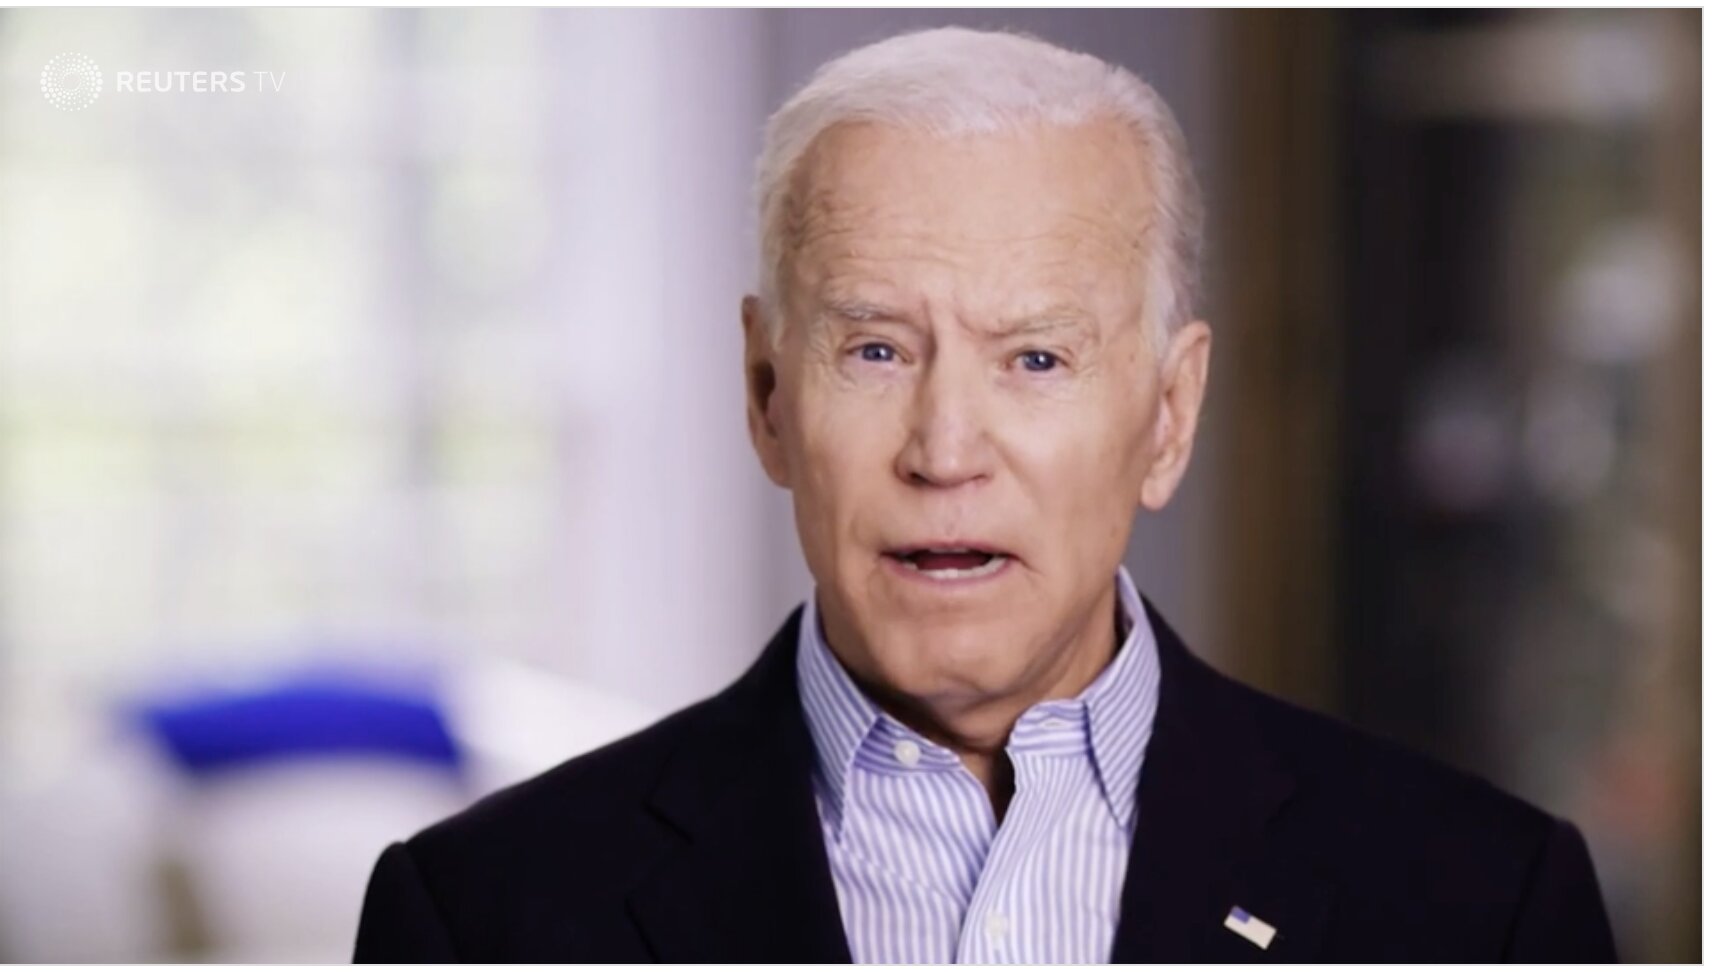 Former Vice President Biden launches White House bid as Democrat frontrunner